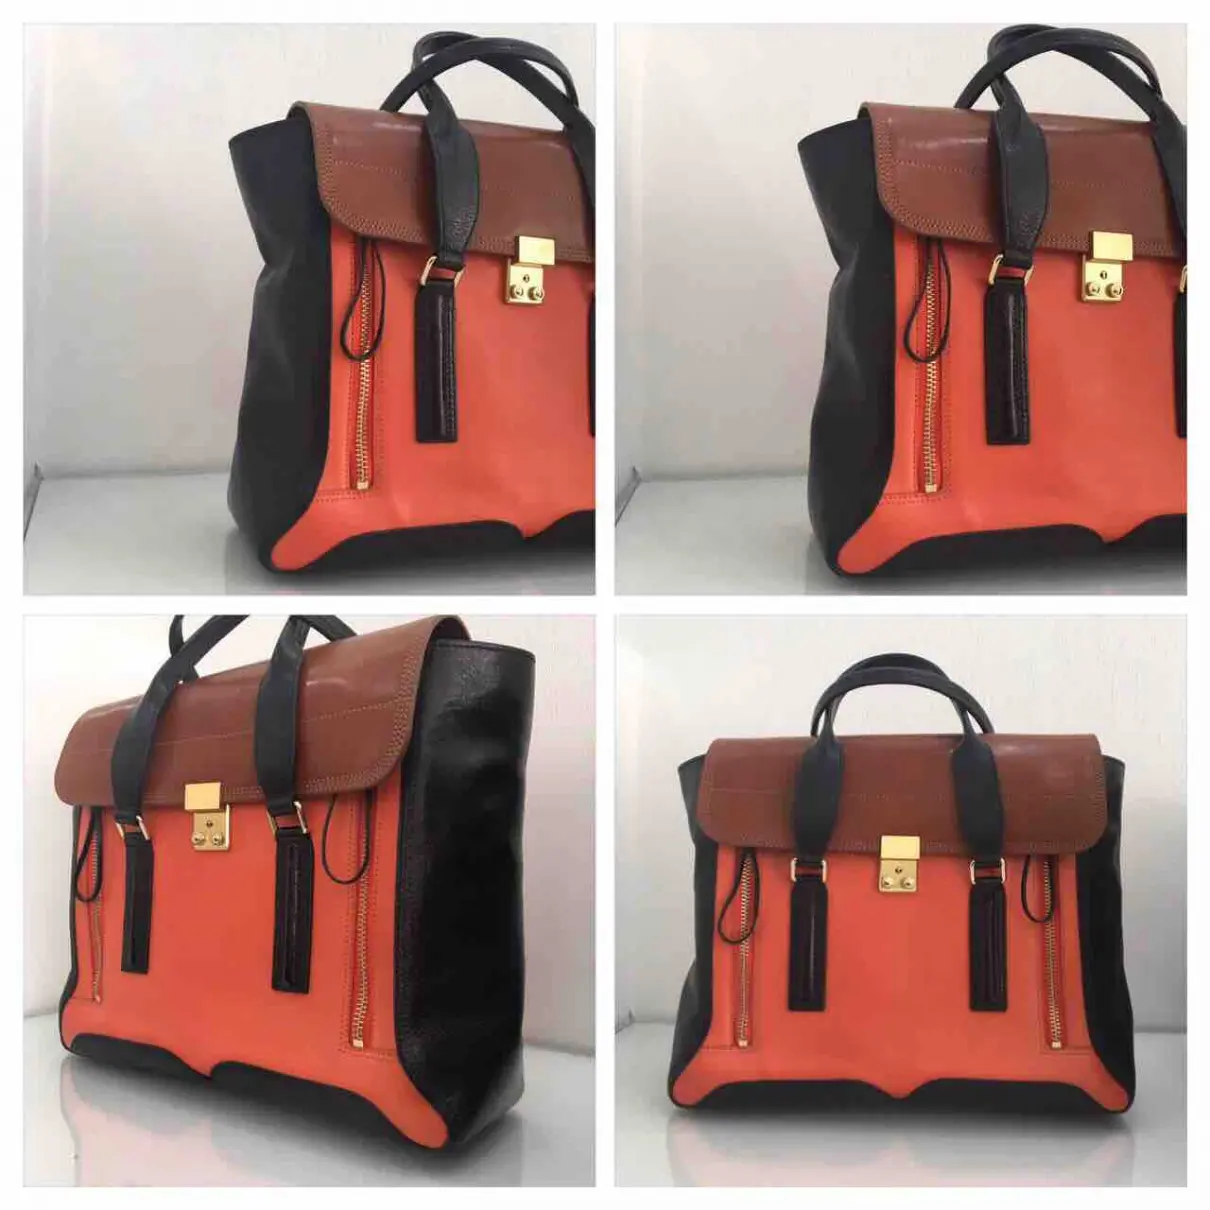 Buy 3.1 Phillip Lim Pashli leather tote online